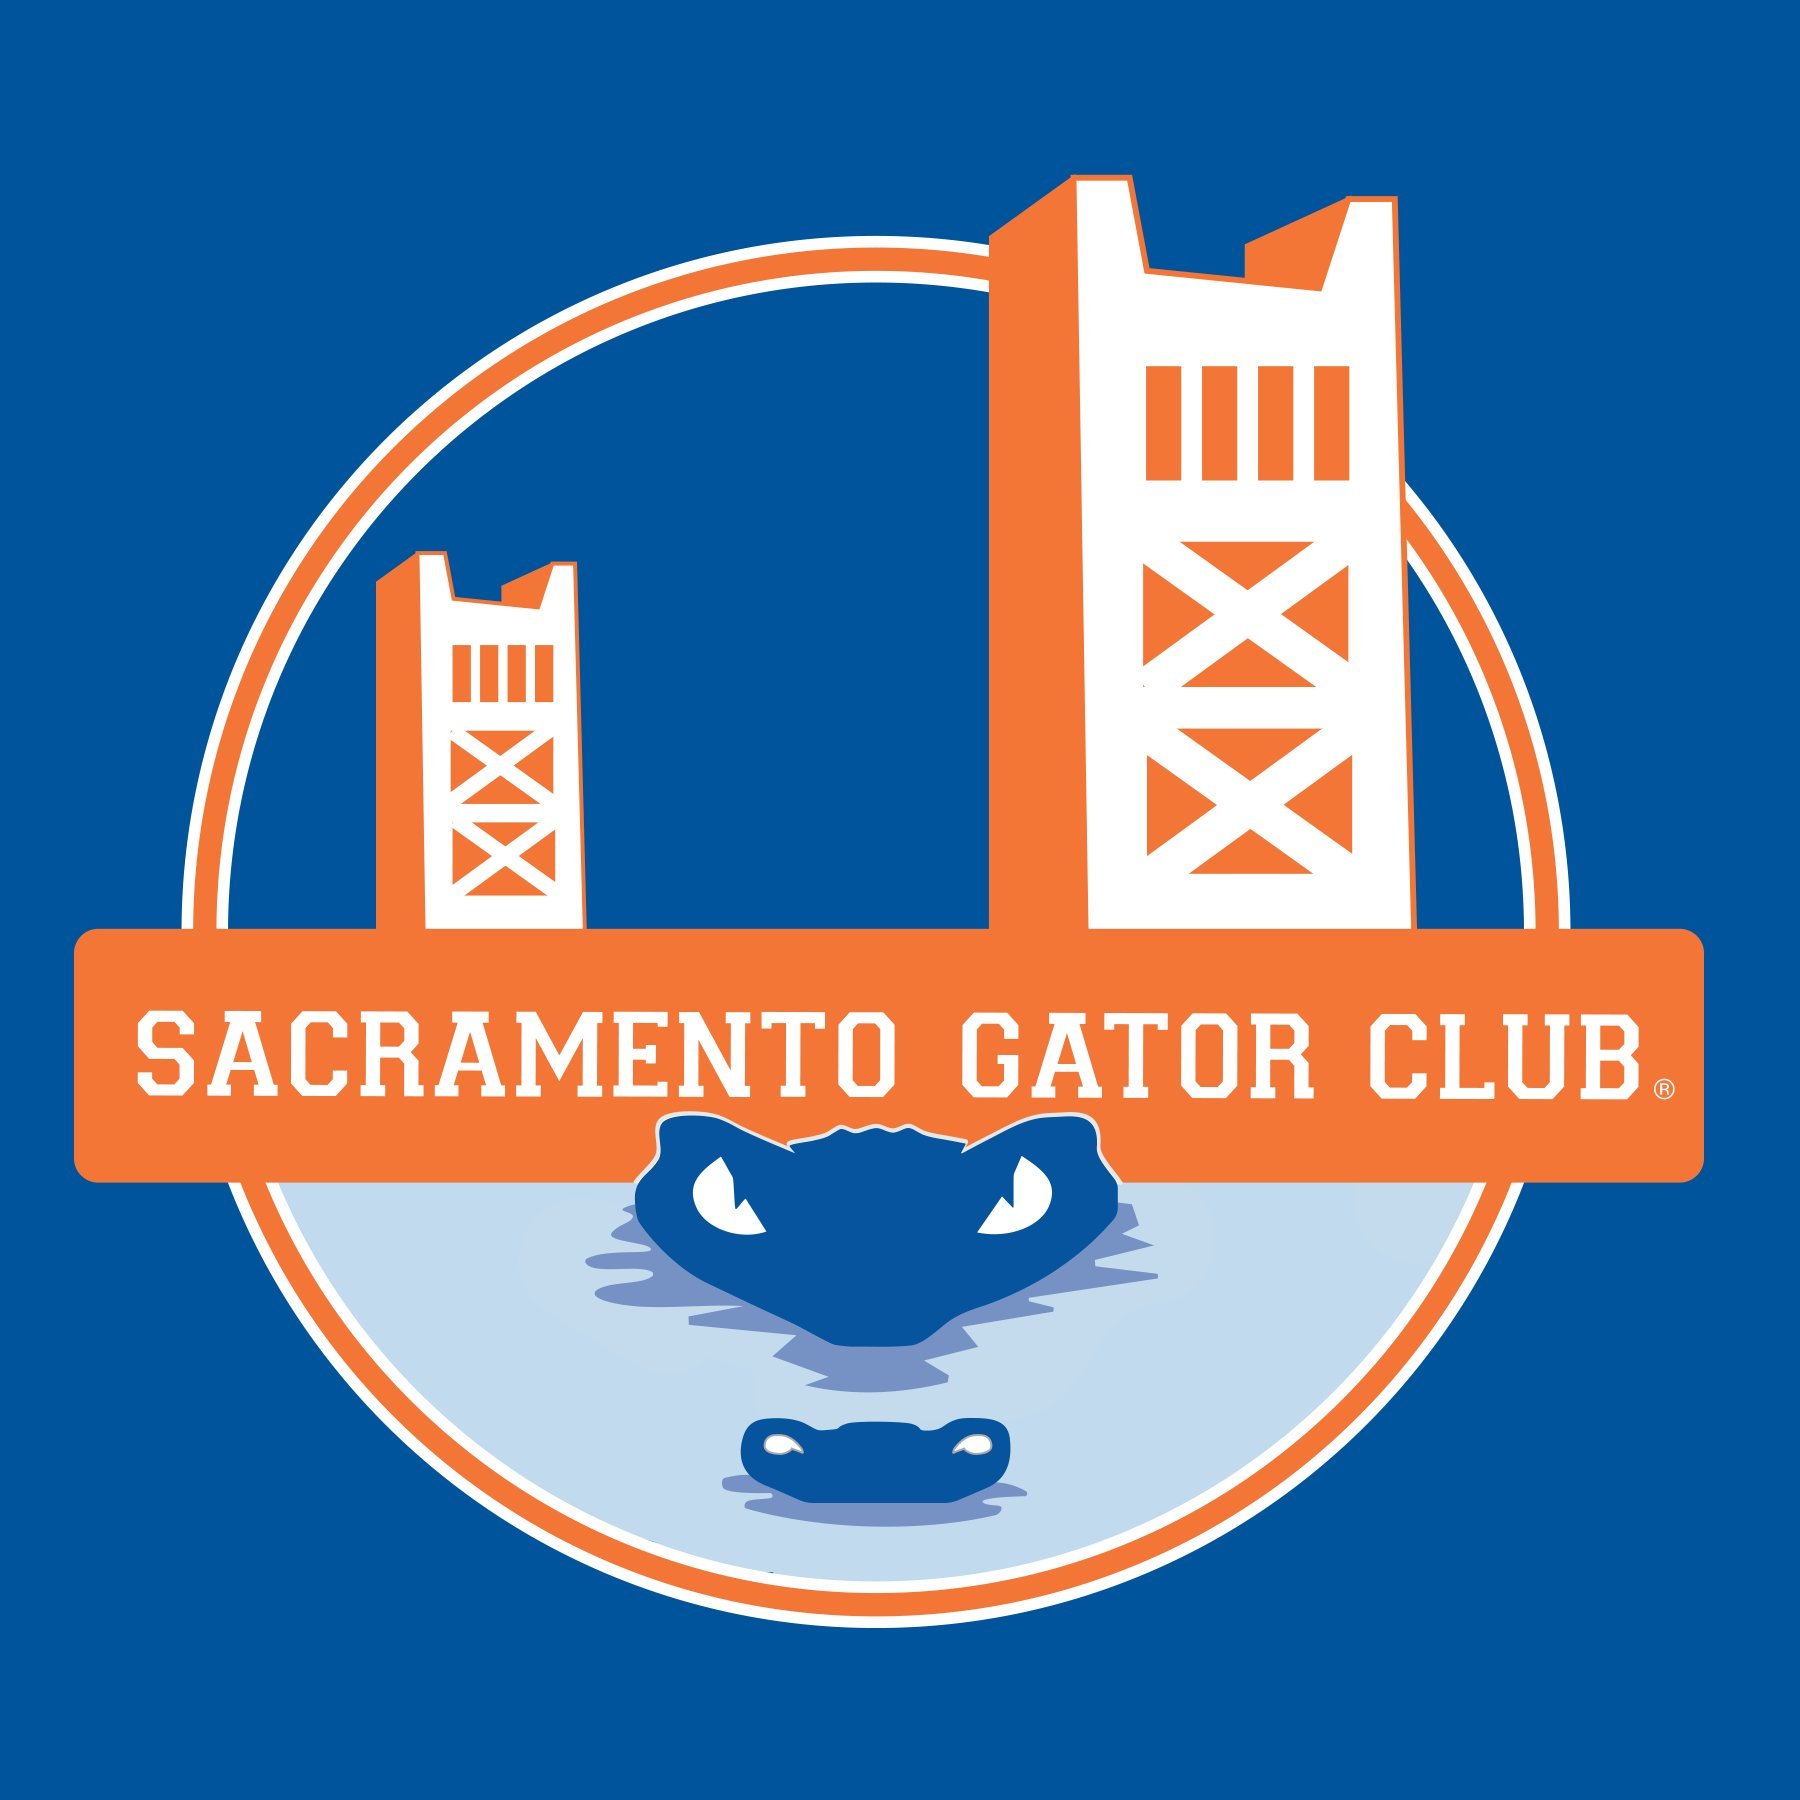 Sacramento Gator Club was est. in 2017 by the @ufalumni Association for @UF Alumni, Friends and Family in the #Sacramento area. #gogators